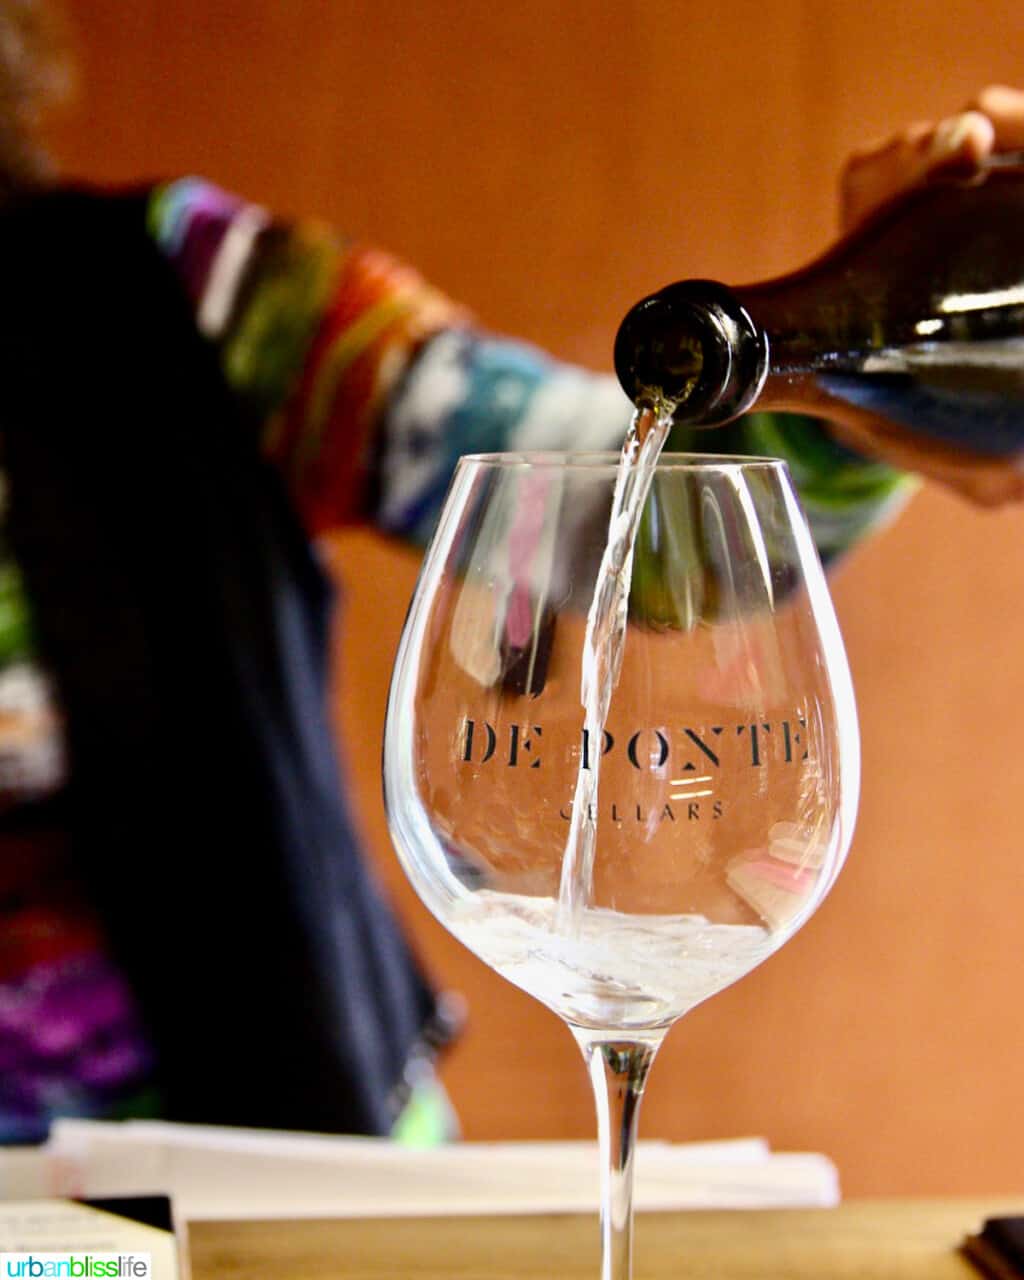 DePonte Cellars white wine